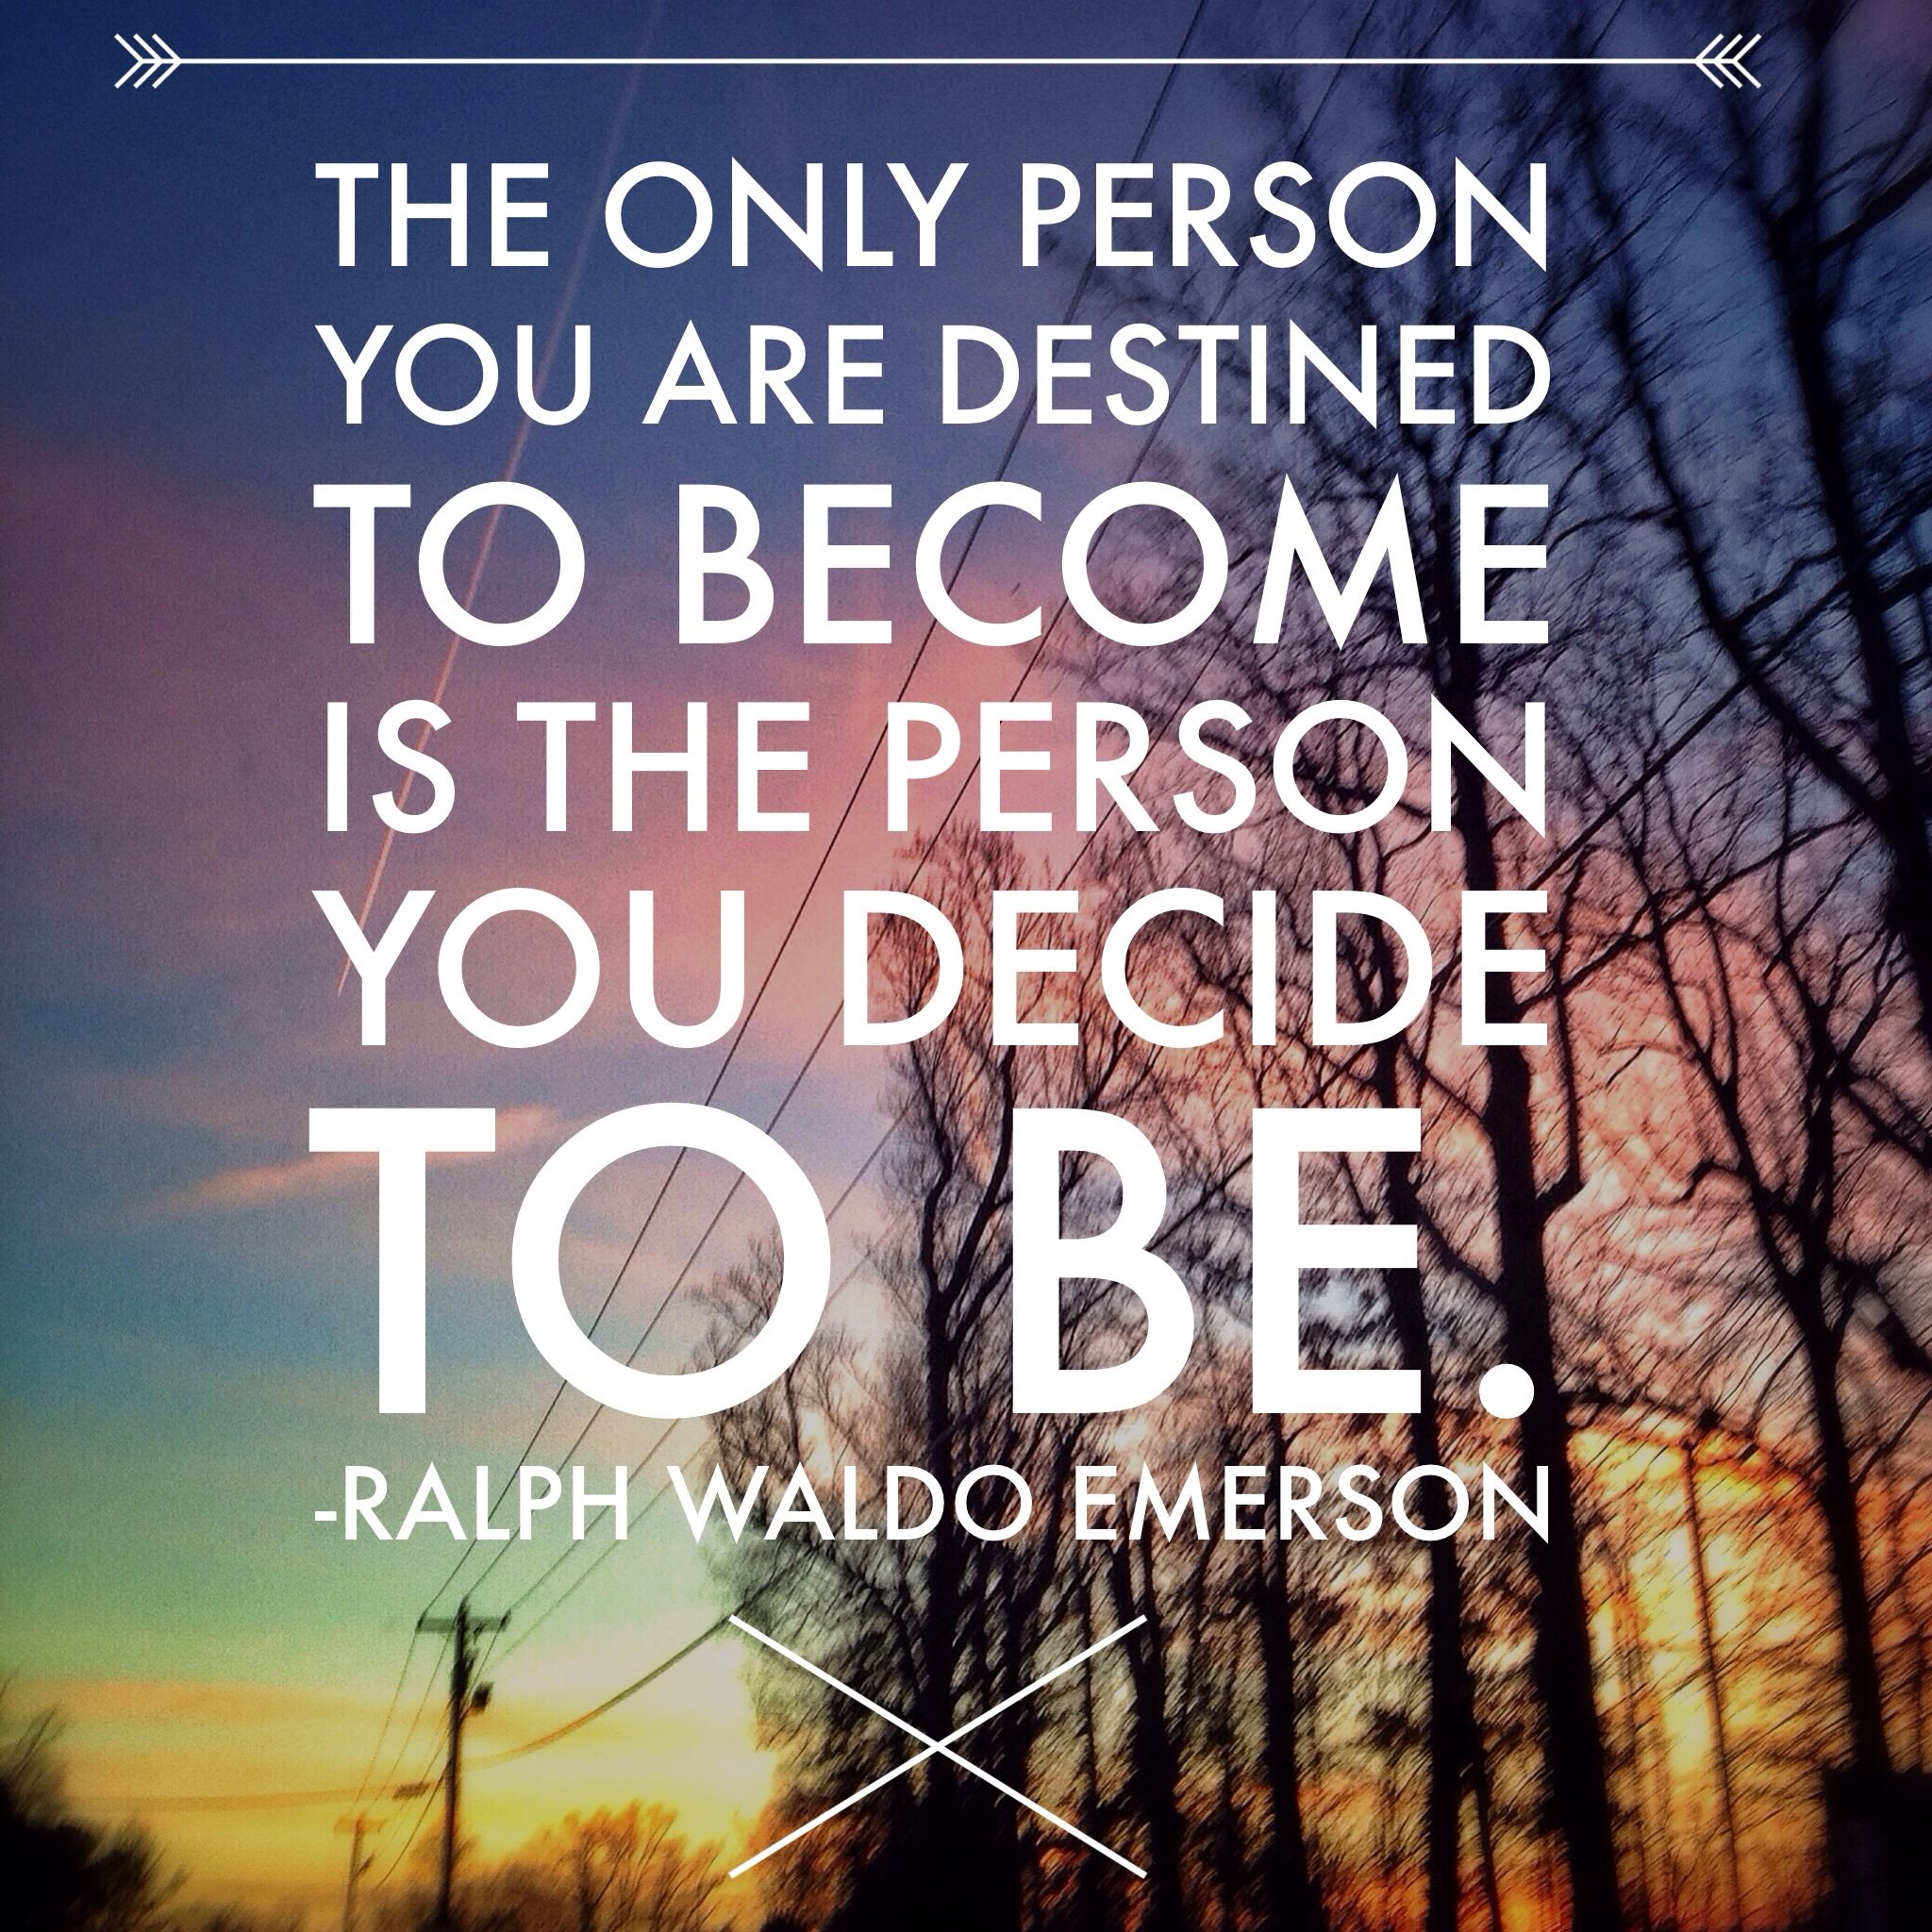 Waldo Emerson Destined Quotes. QuotesGram